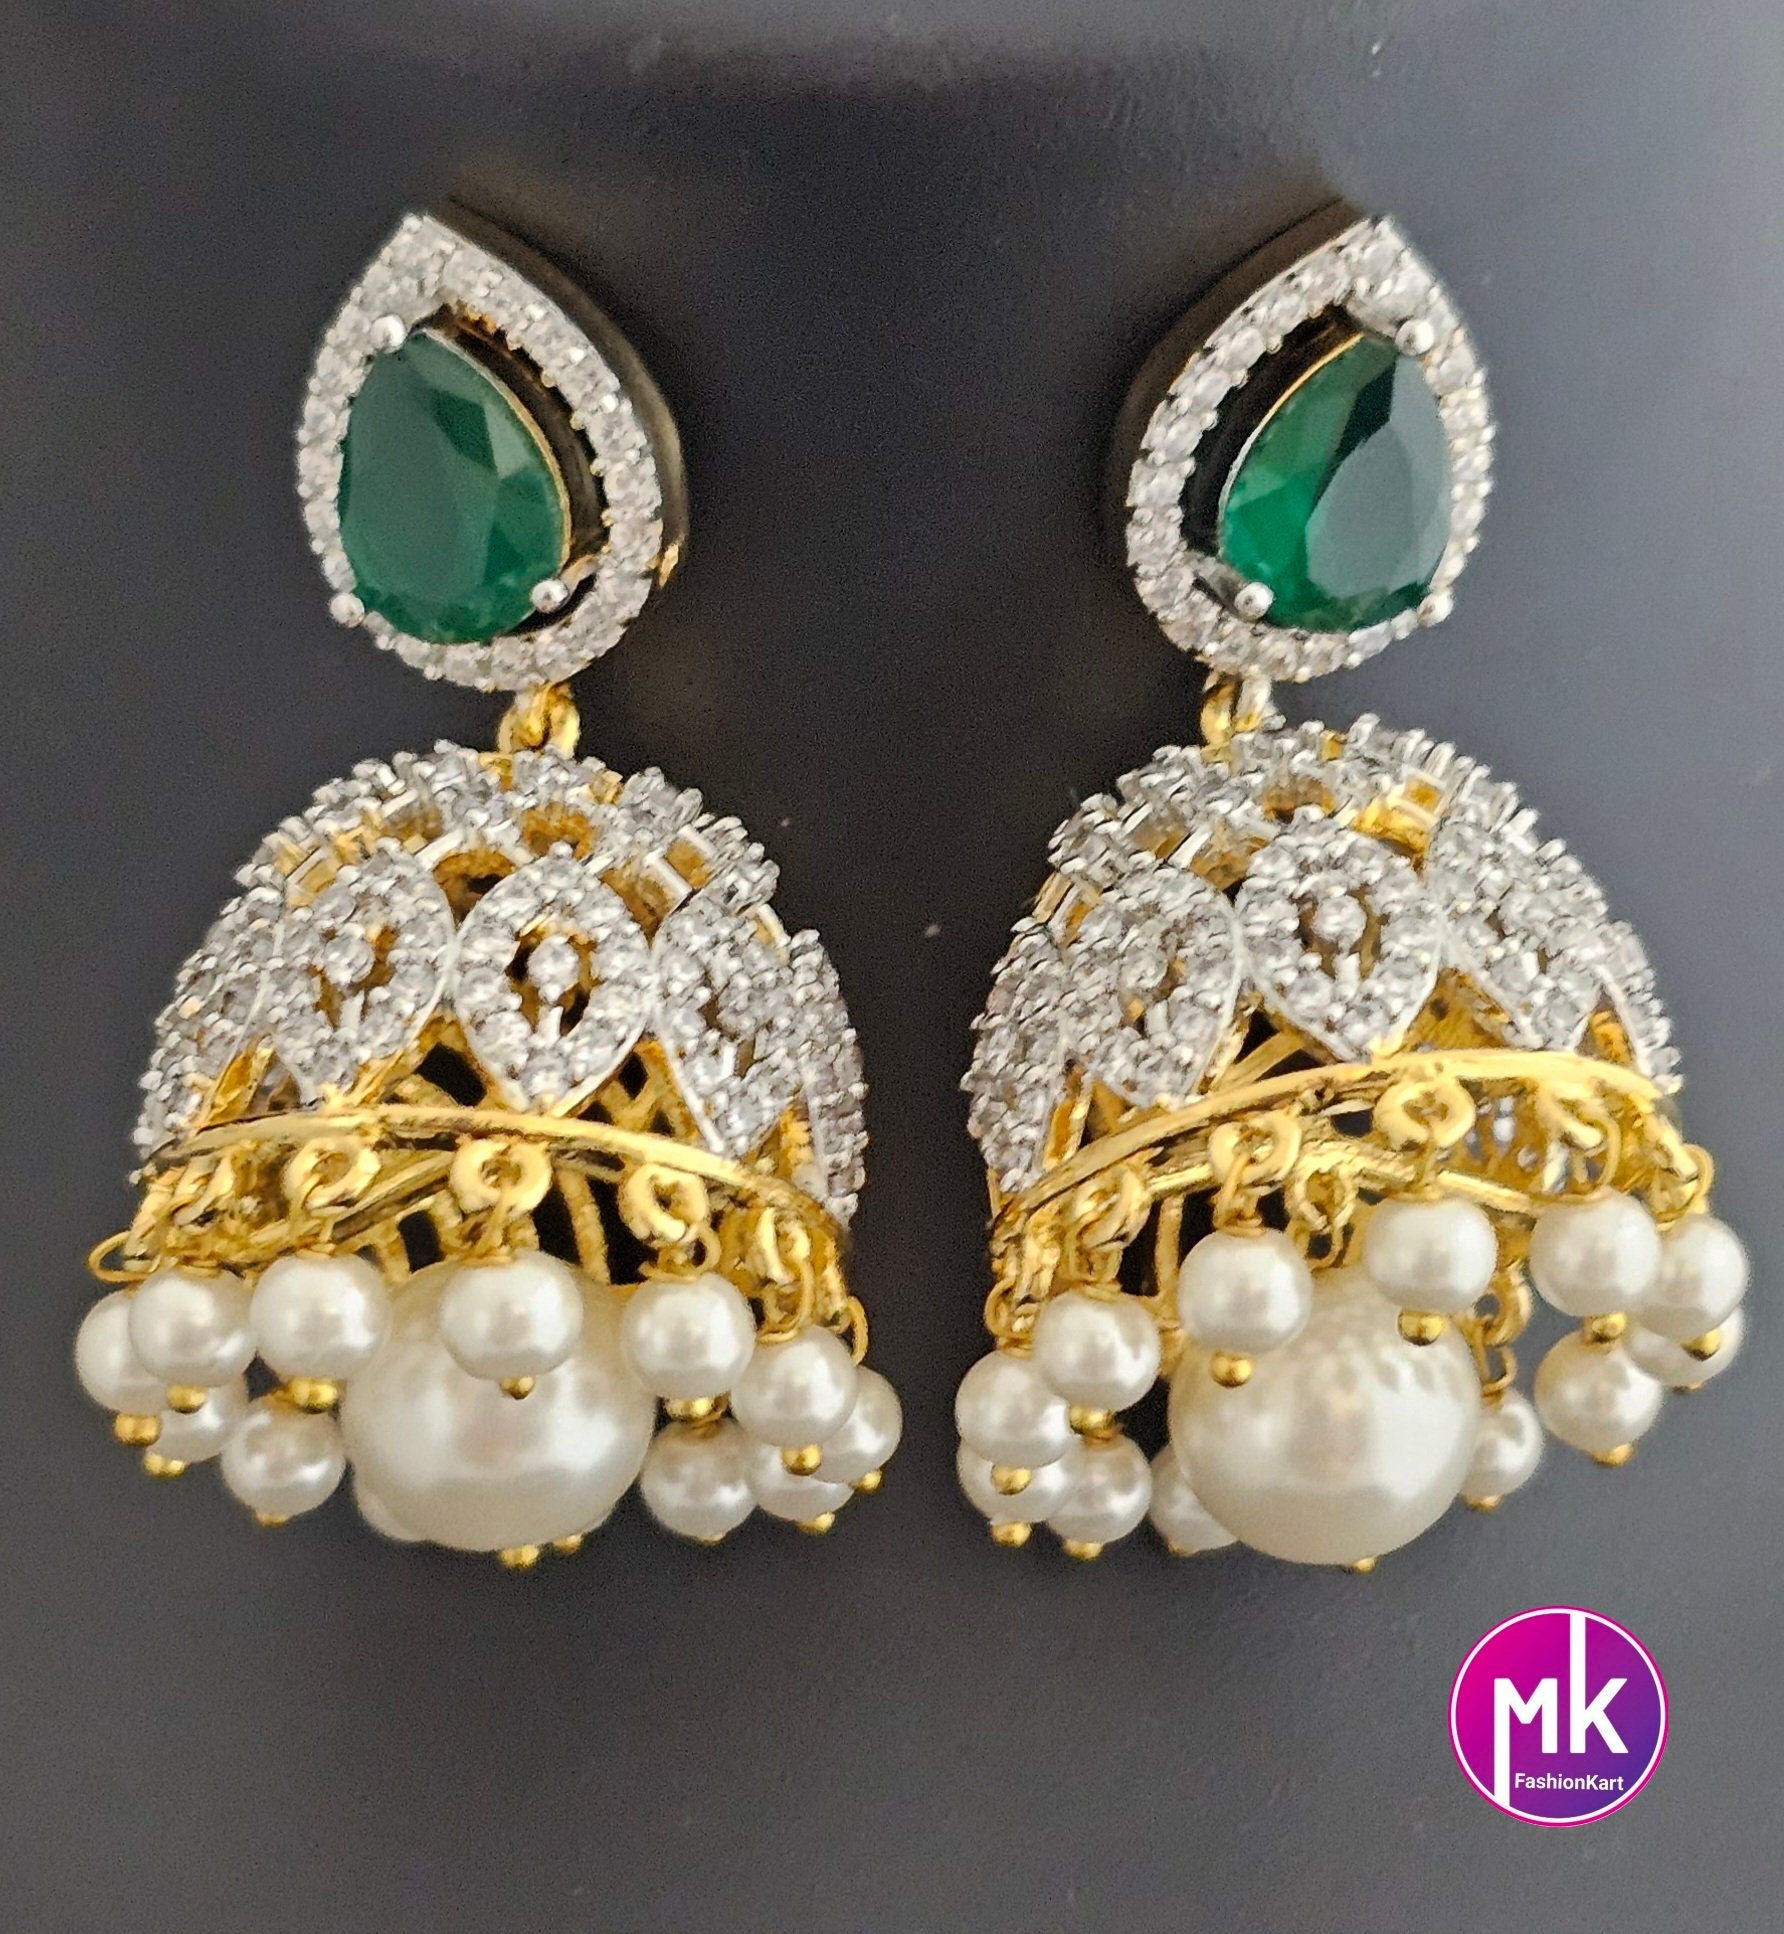 Premium Gold Finish Emerald Stone Bridal Beautiful Choker with pendent and matching Jhumkas - Gold Jewelry Replica